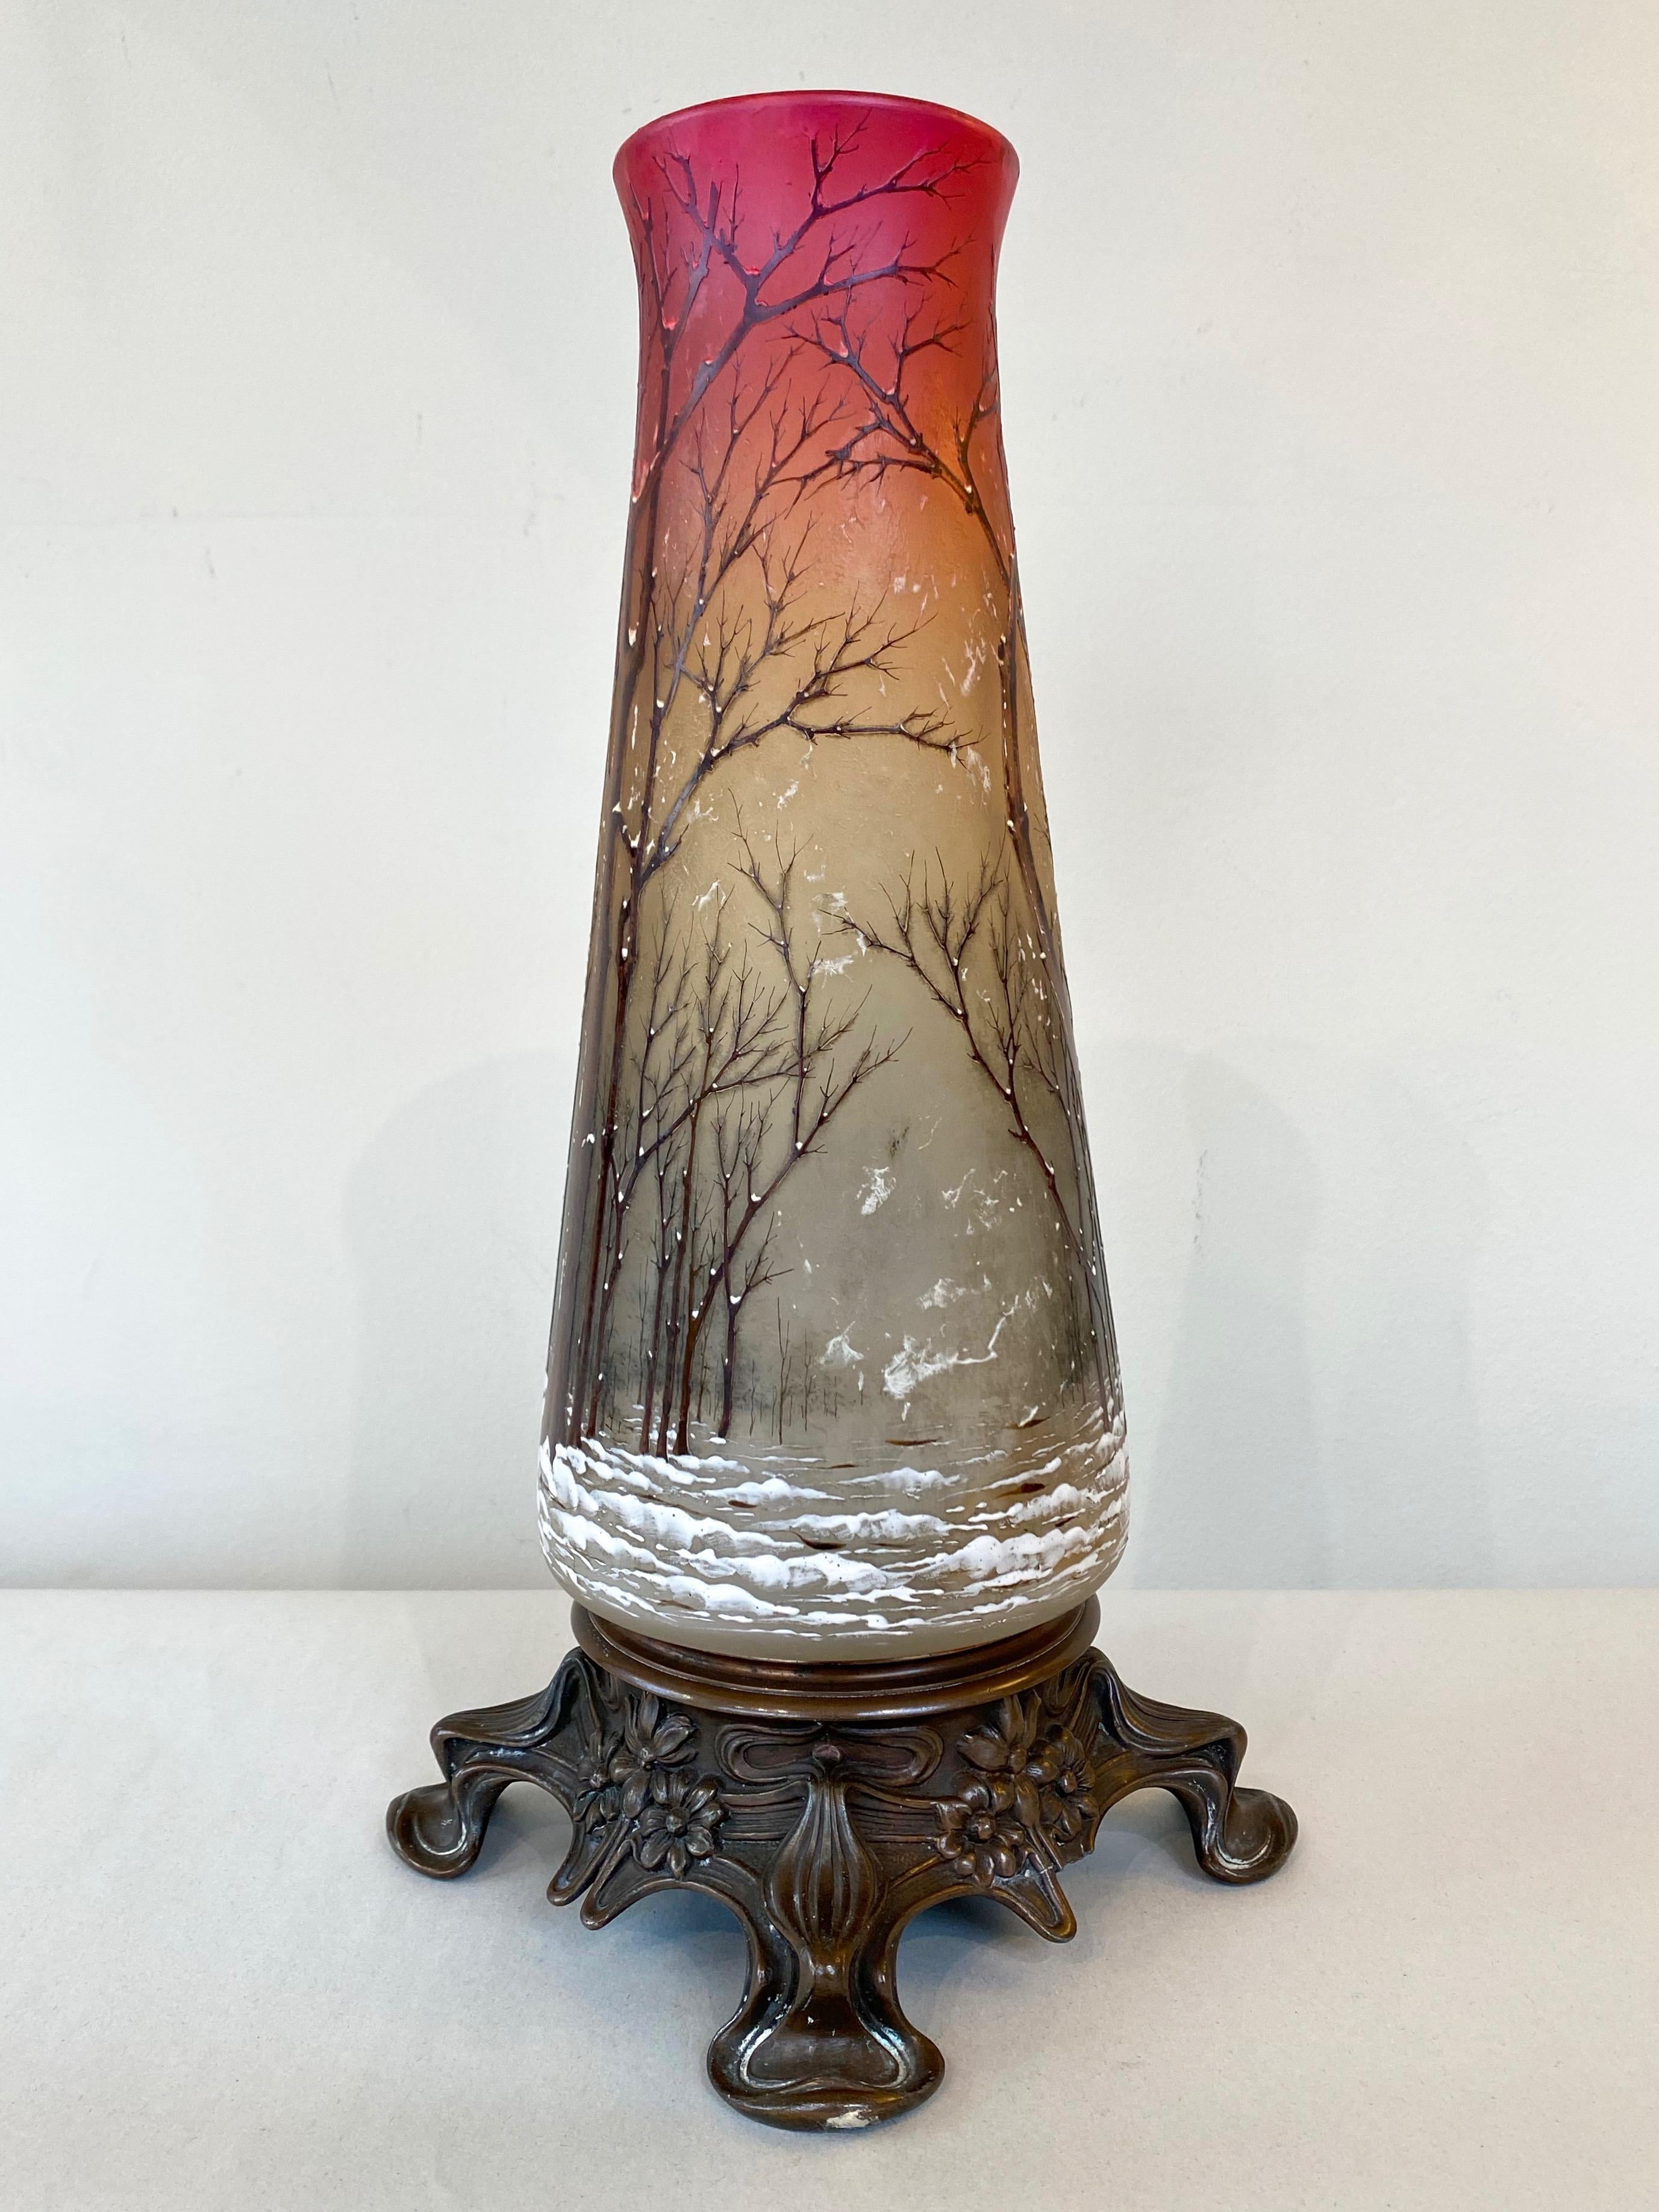 French Daum “Winter Scene” Vase or Lamp Body on Art Nouveau Bronze Base, circa 1900